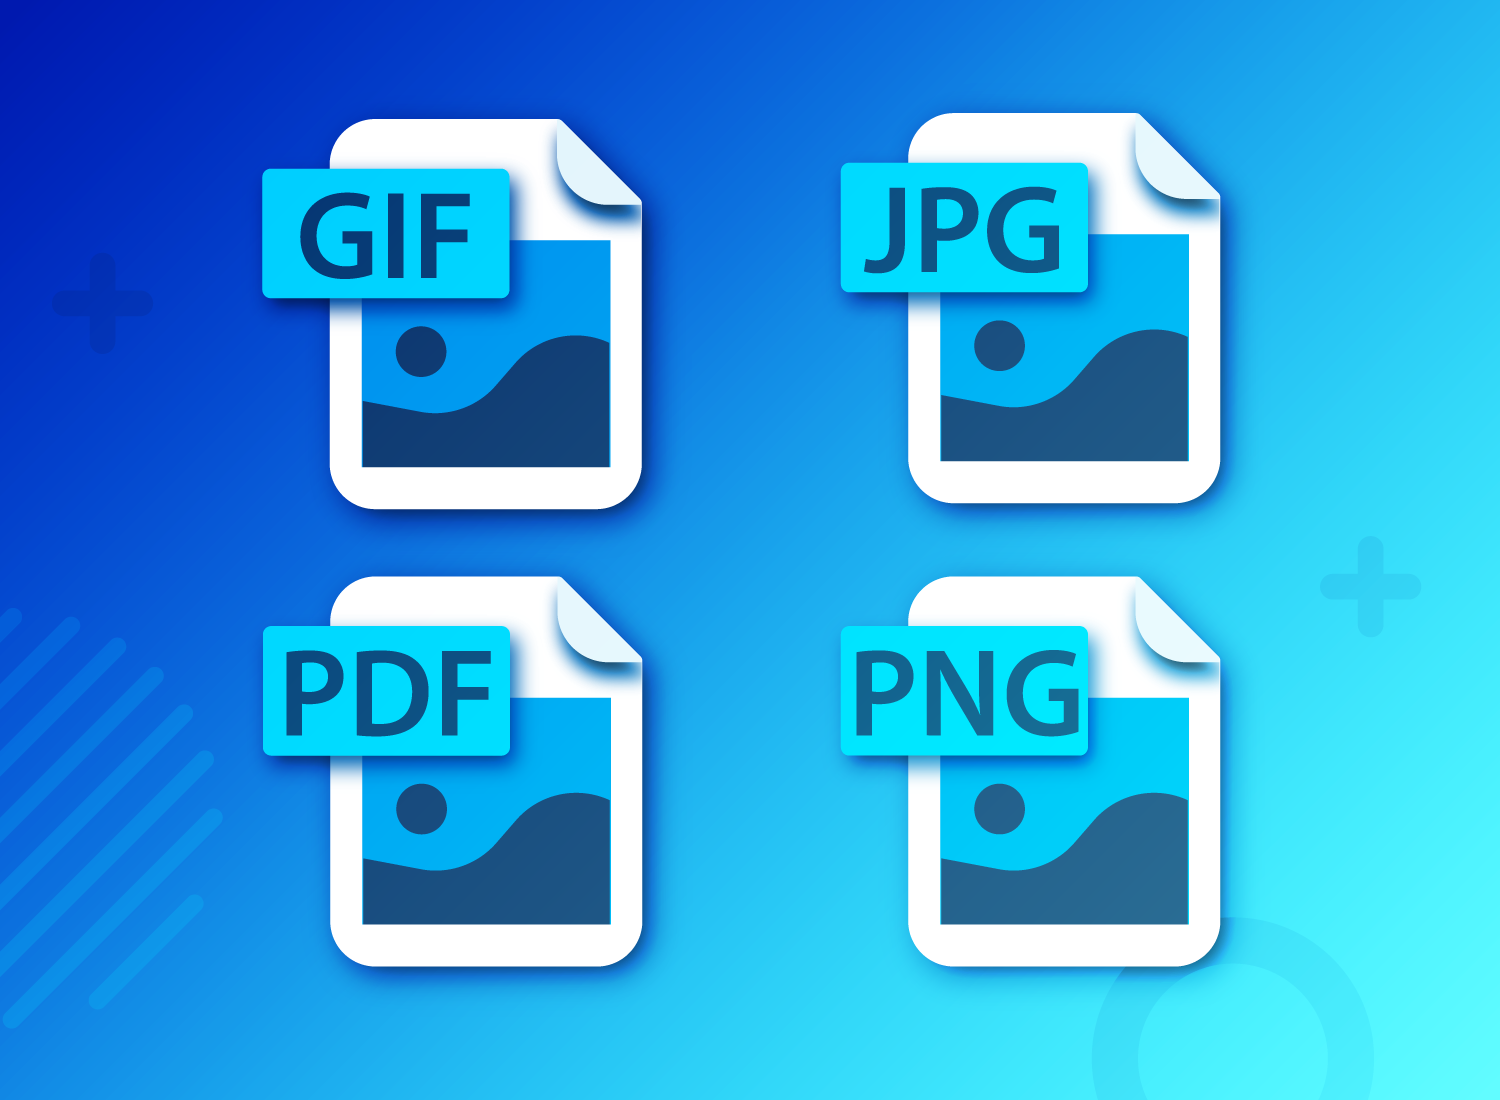 Understanding image file formats